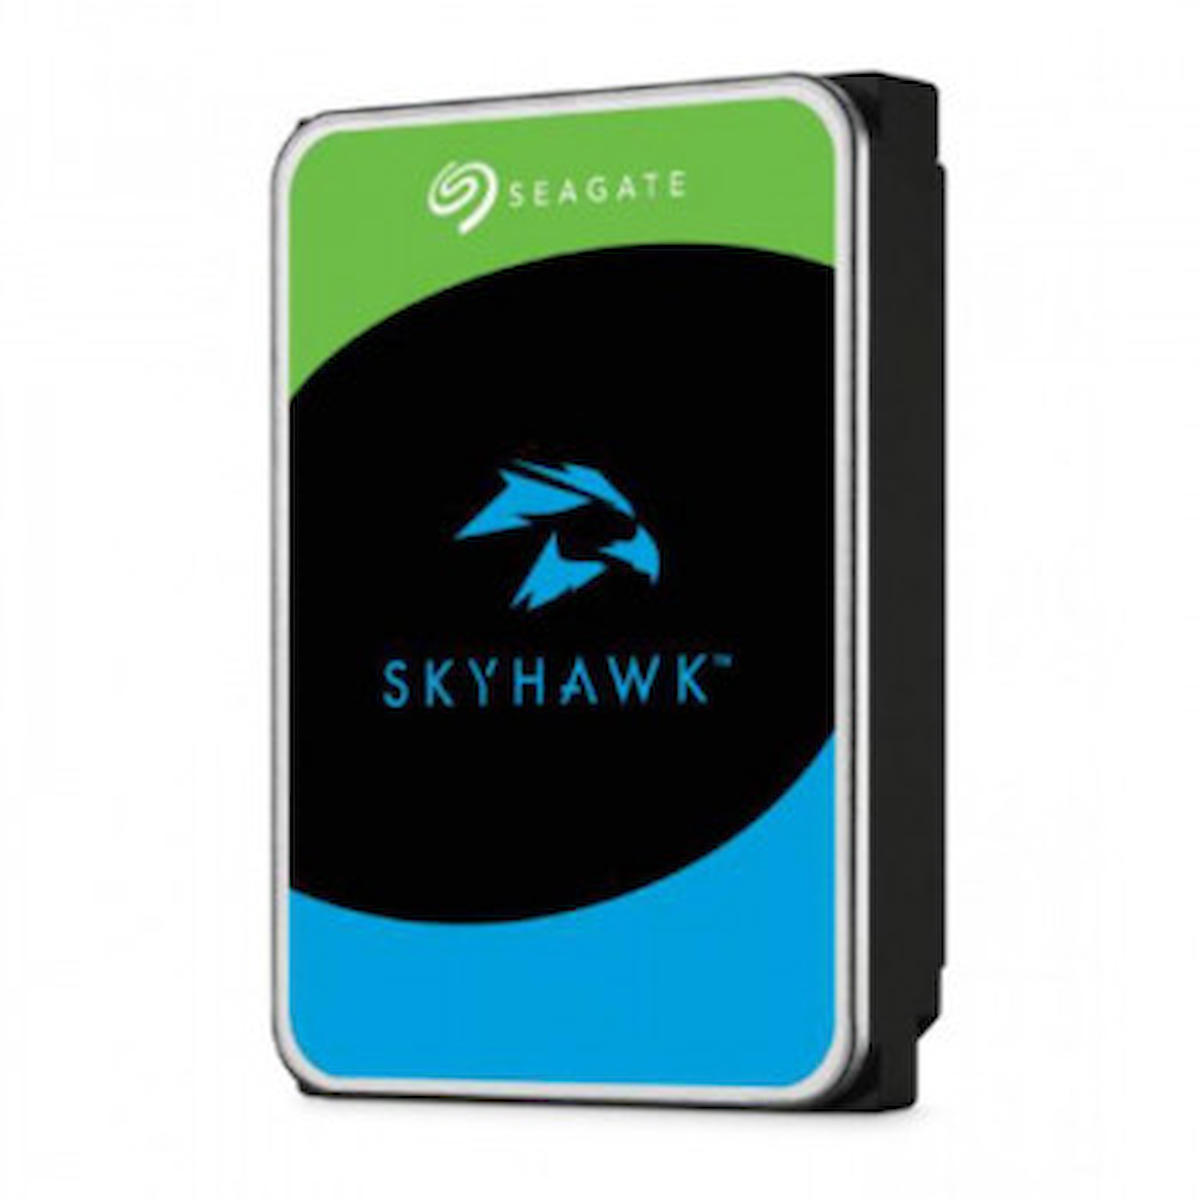 Seagate Skyhawk ST2000VX017 2 TB 3.5 inç 5900 RPM 256 MB SATA 3.0 Güvenlik Kamerası Harddisk